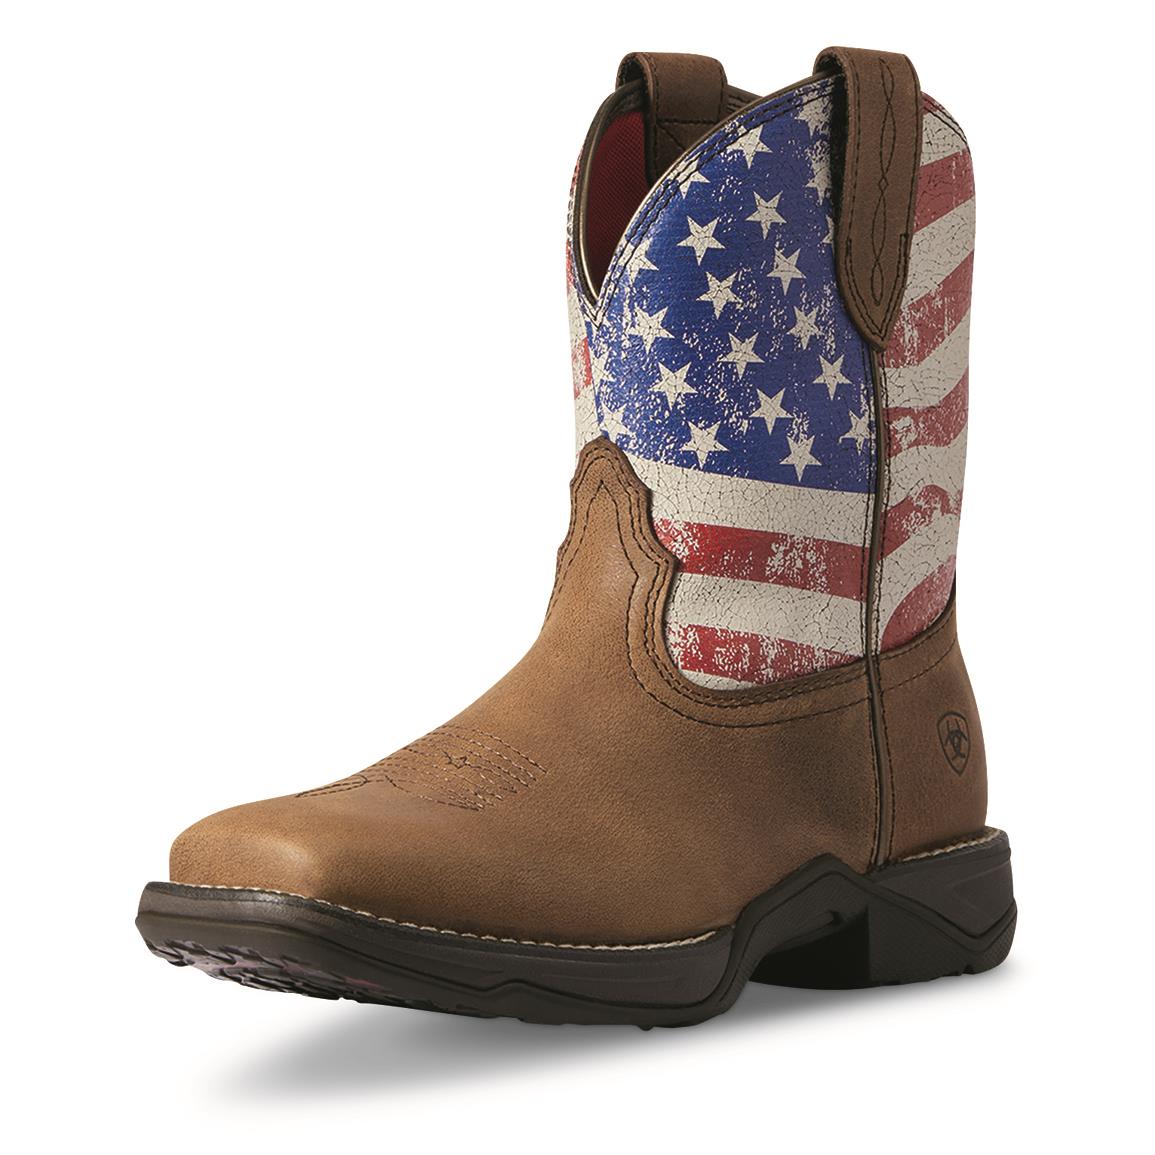 Ariat Women's Anthem Shortie Patriot Boots, Red Brown/american Flag